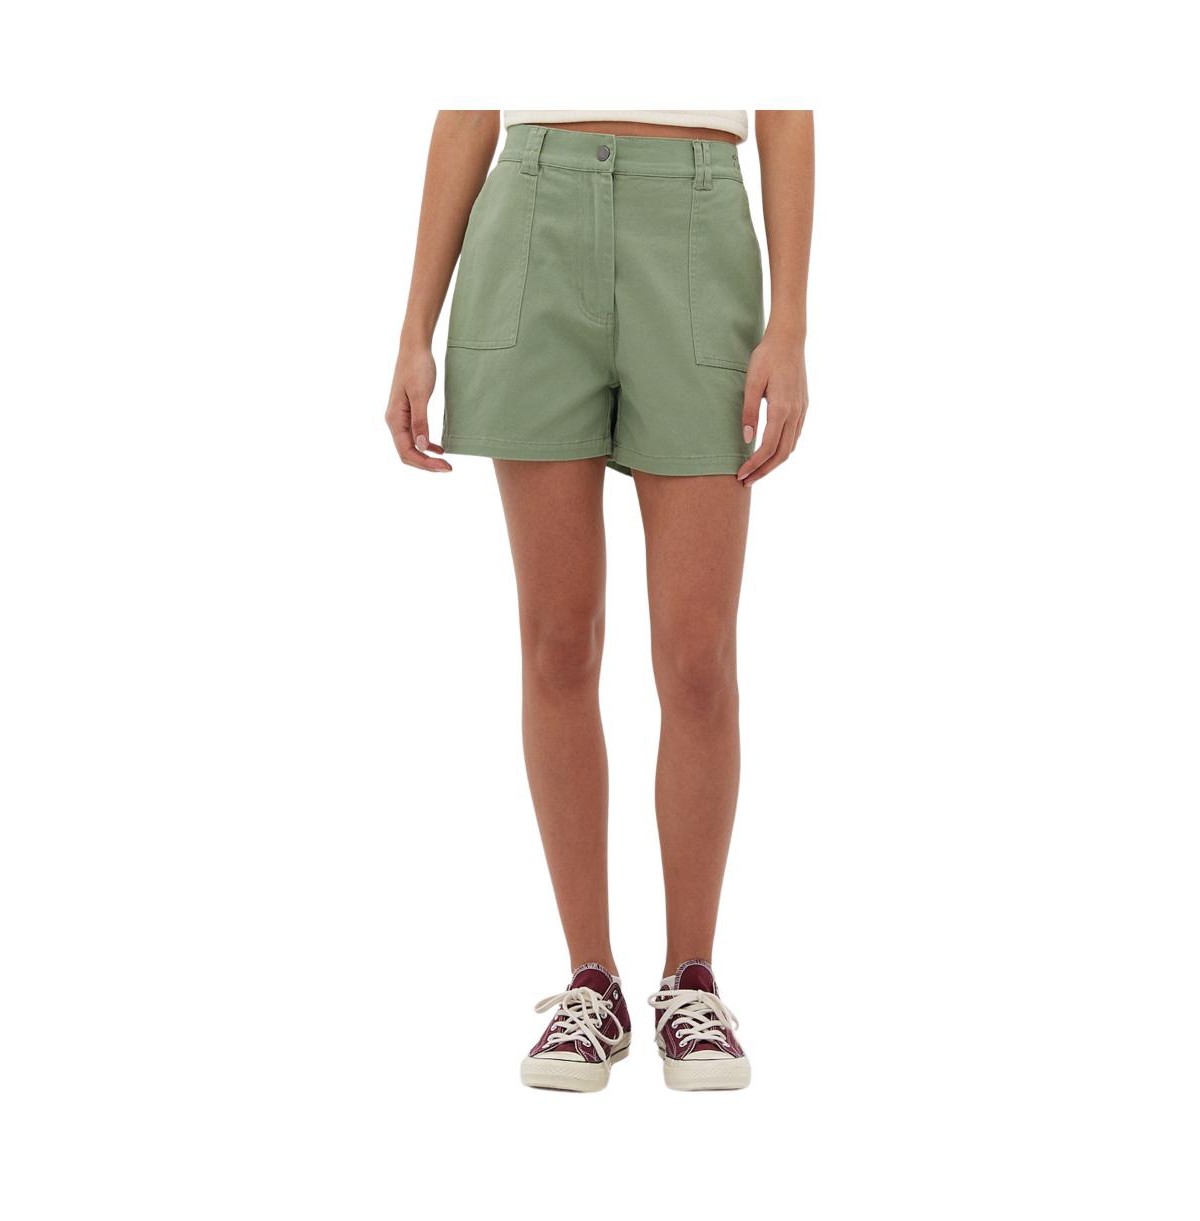 Women's Cannon Carpenter Shorts - Hedge green